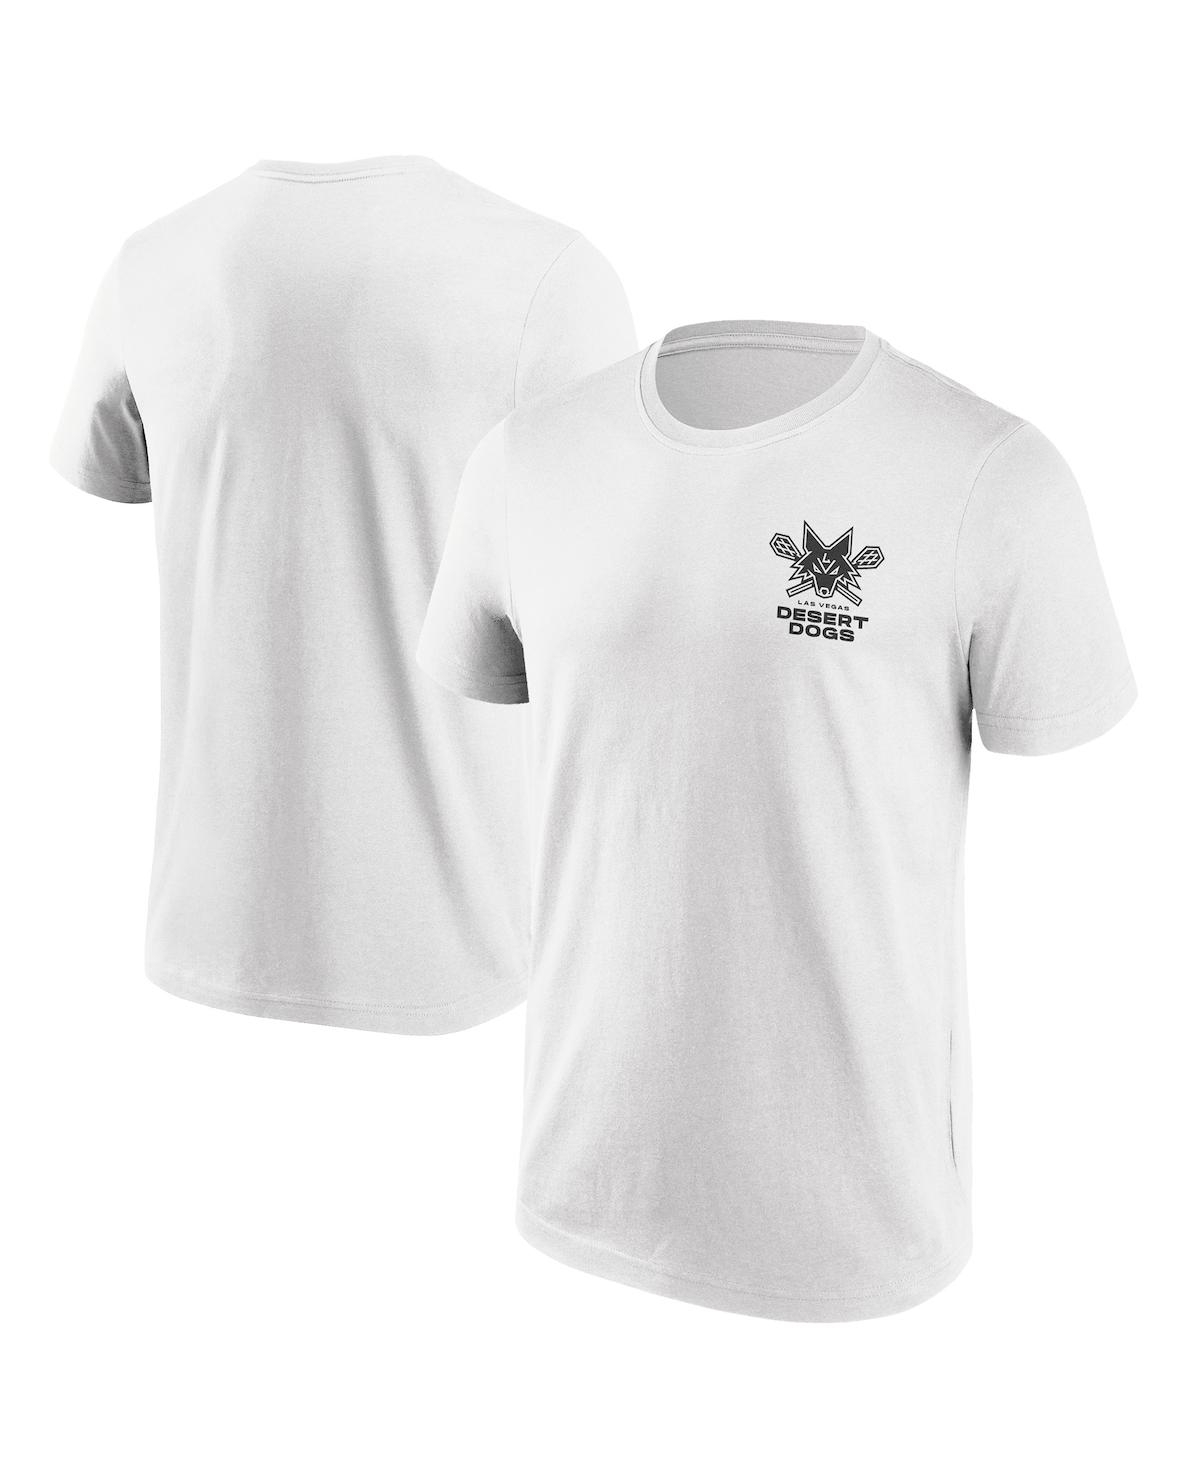 Shop Adpro Sports Men's White Las Vegas Desert Dogs Primary Logo T-shirt